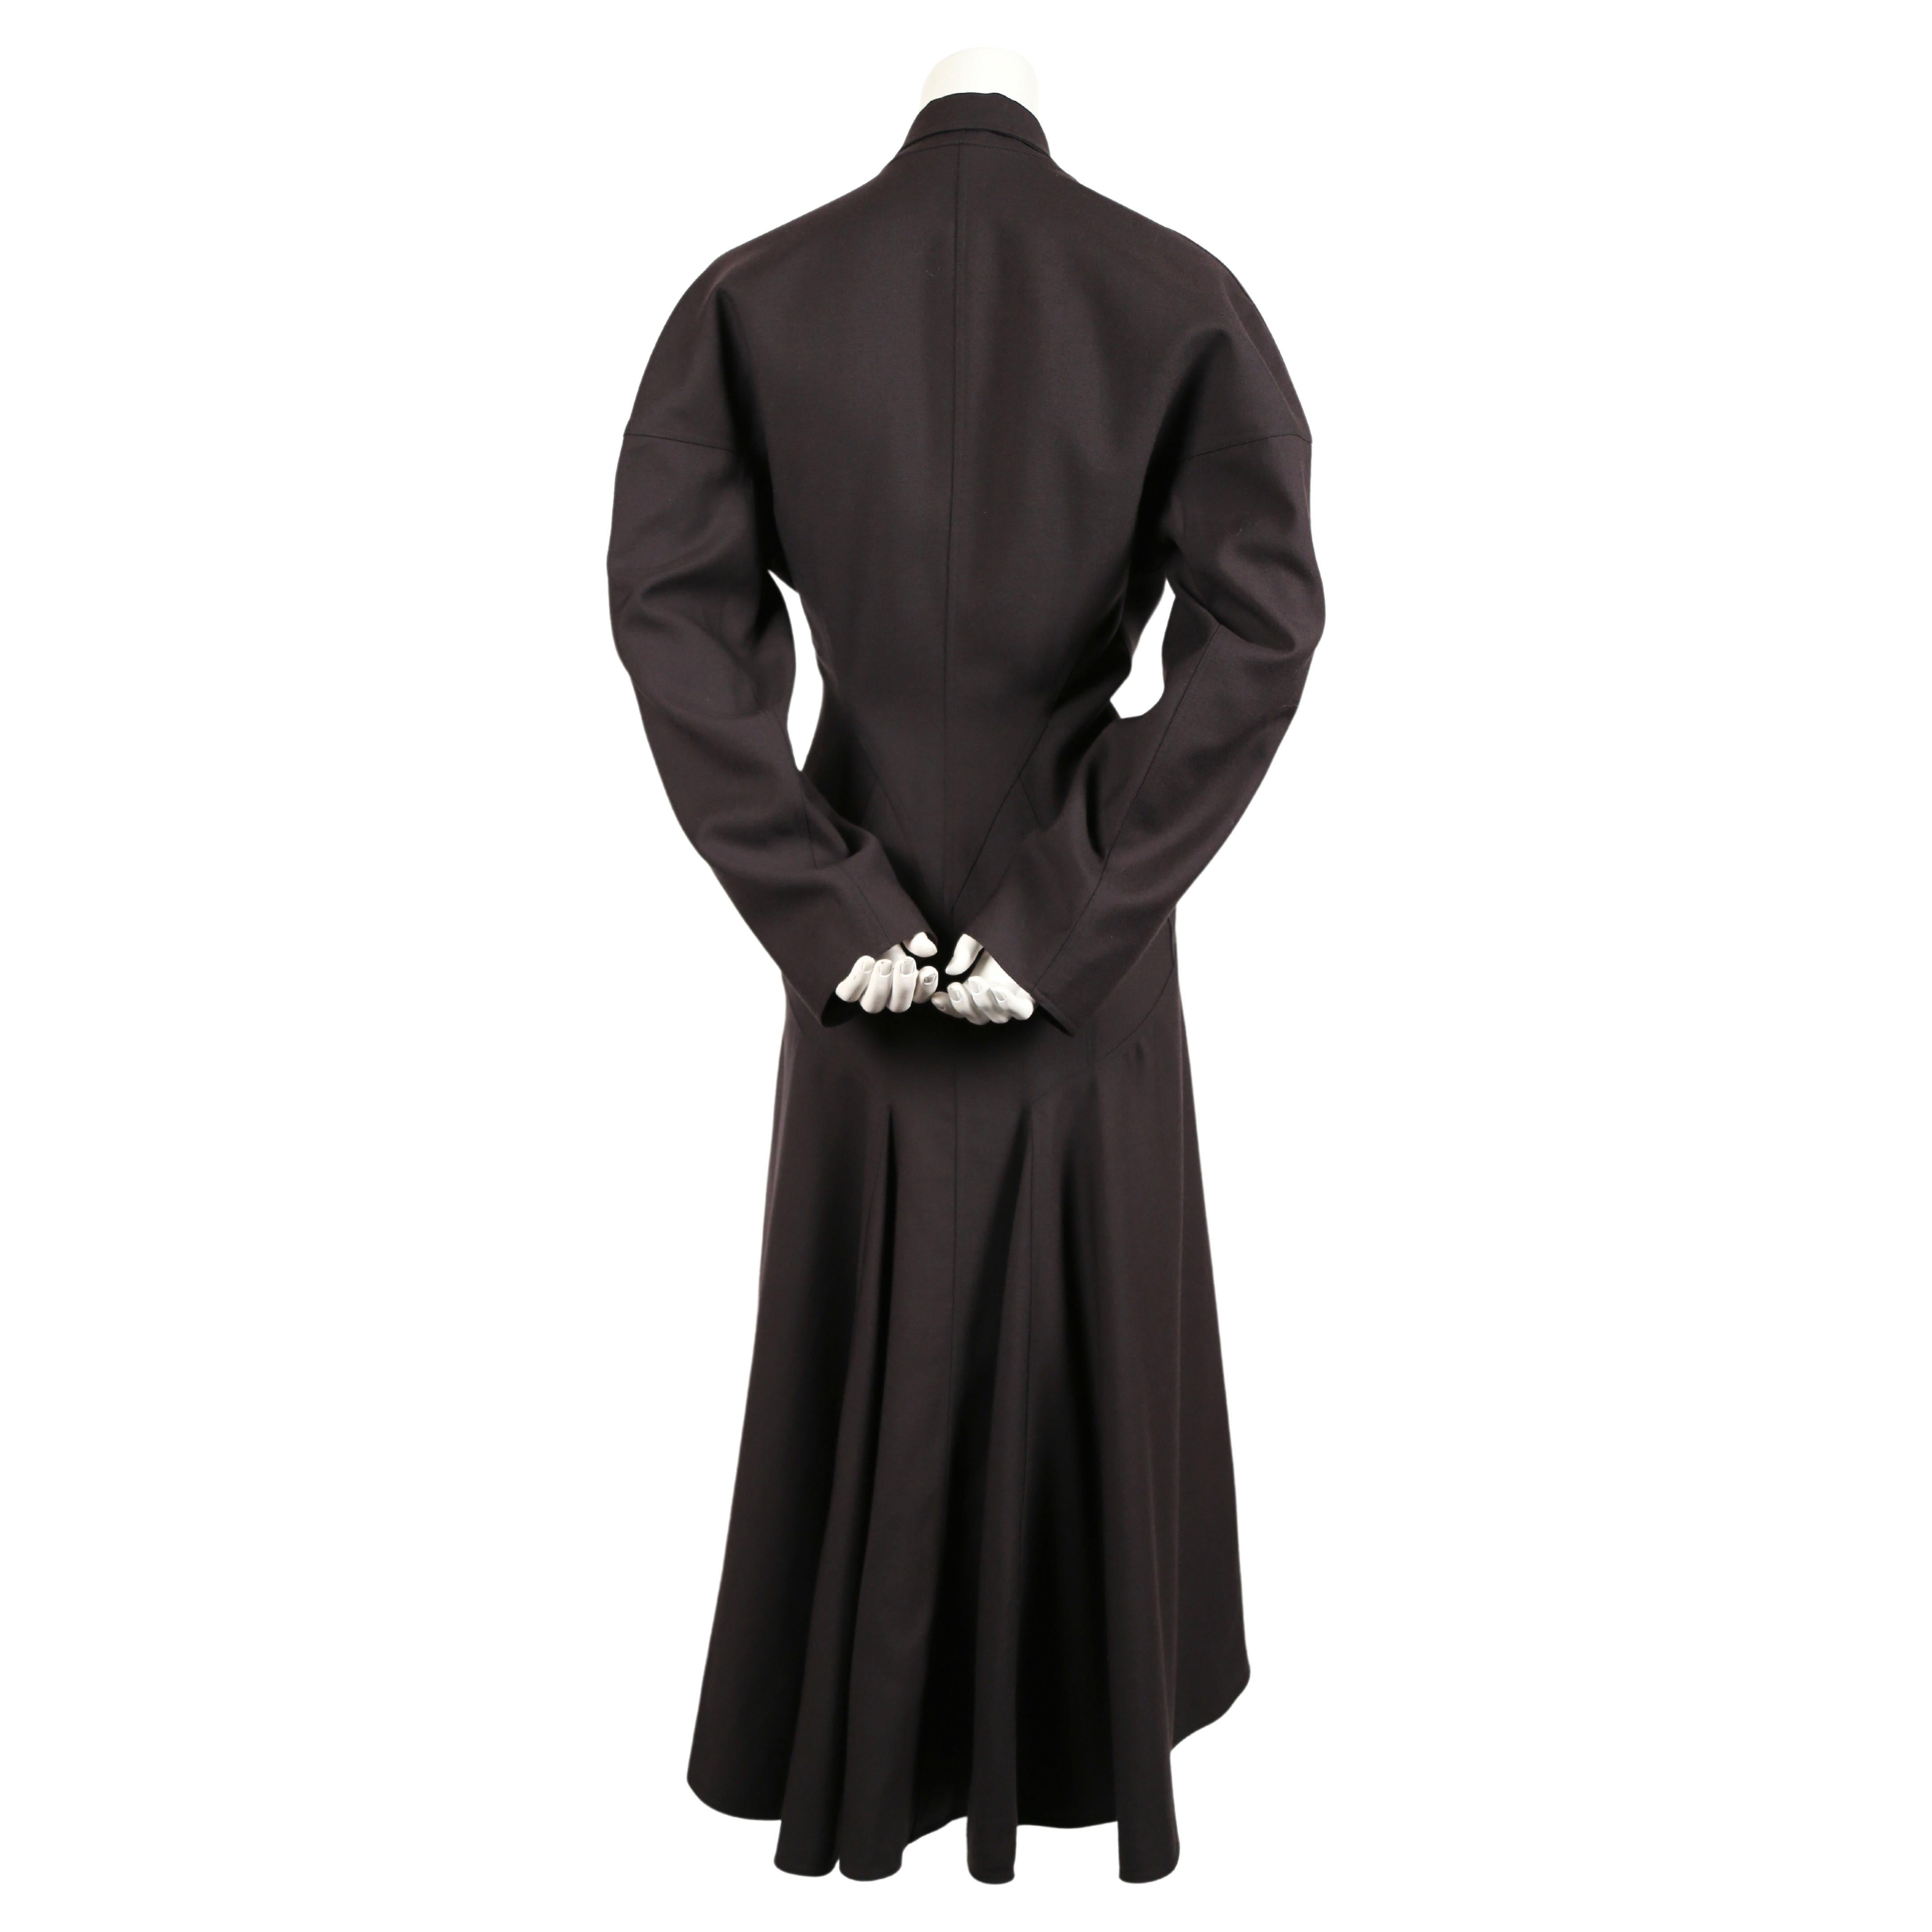 1986 AZZEDINE ALAIA charcoal wool gabardine RUNWAY coat with seamed back  For Sale 1